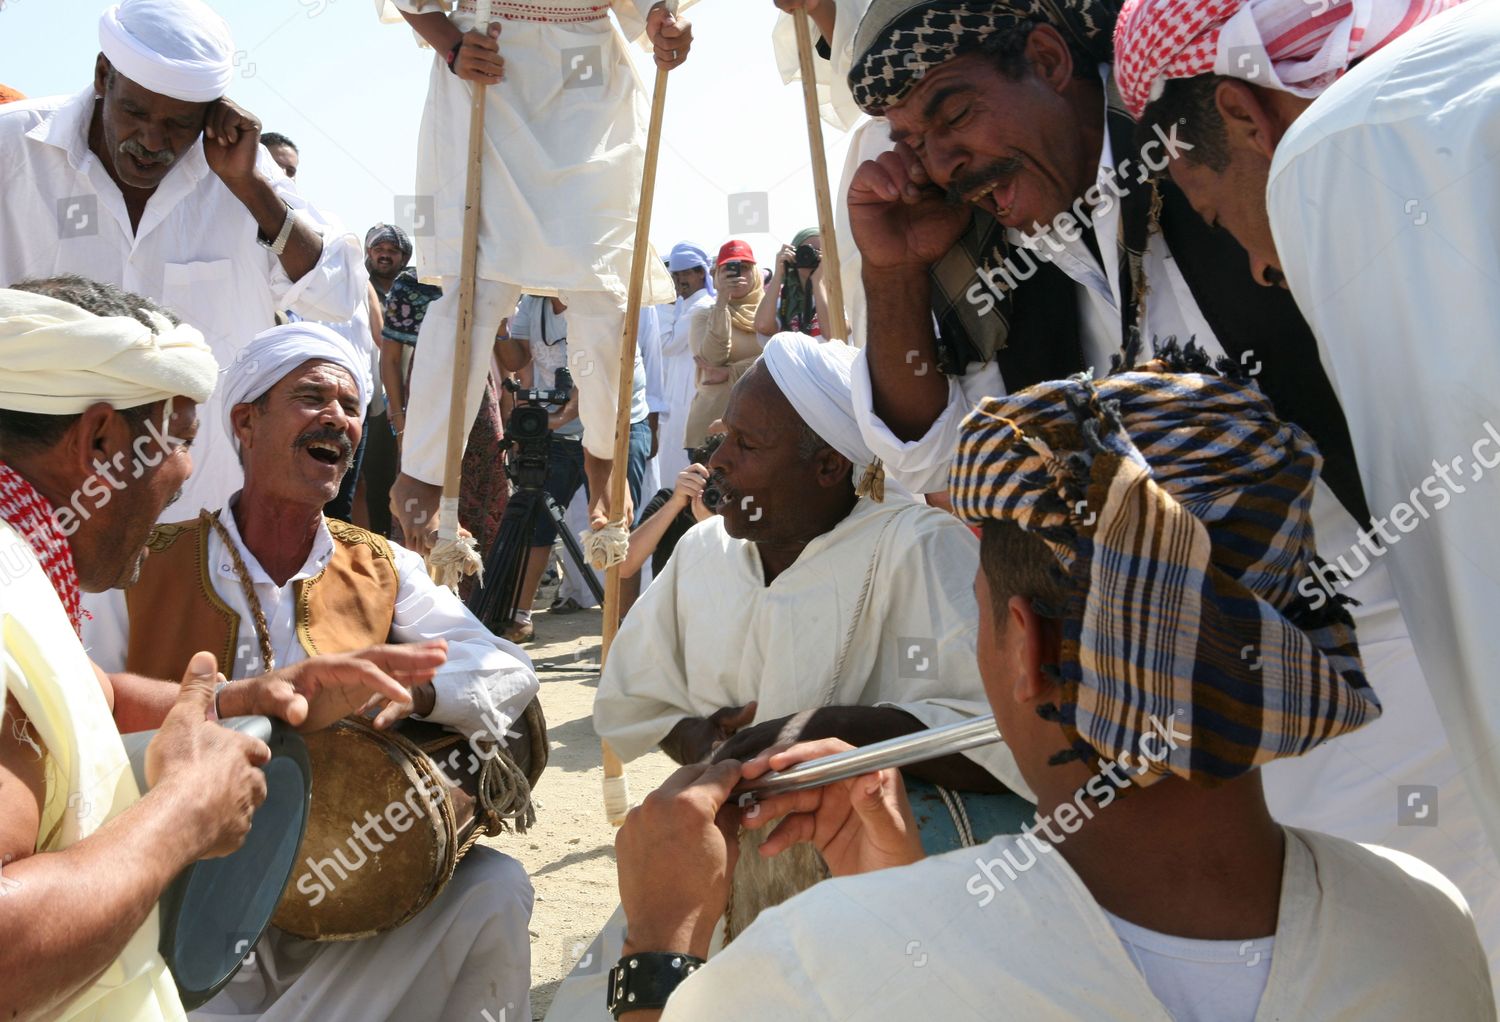 egypt-tribes-festival-characters-of-egypt-oct-2010-shutterstock-editorial-7720937h.jpg